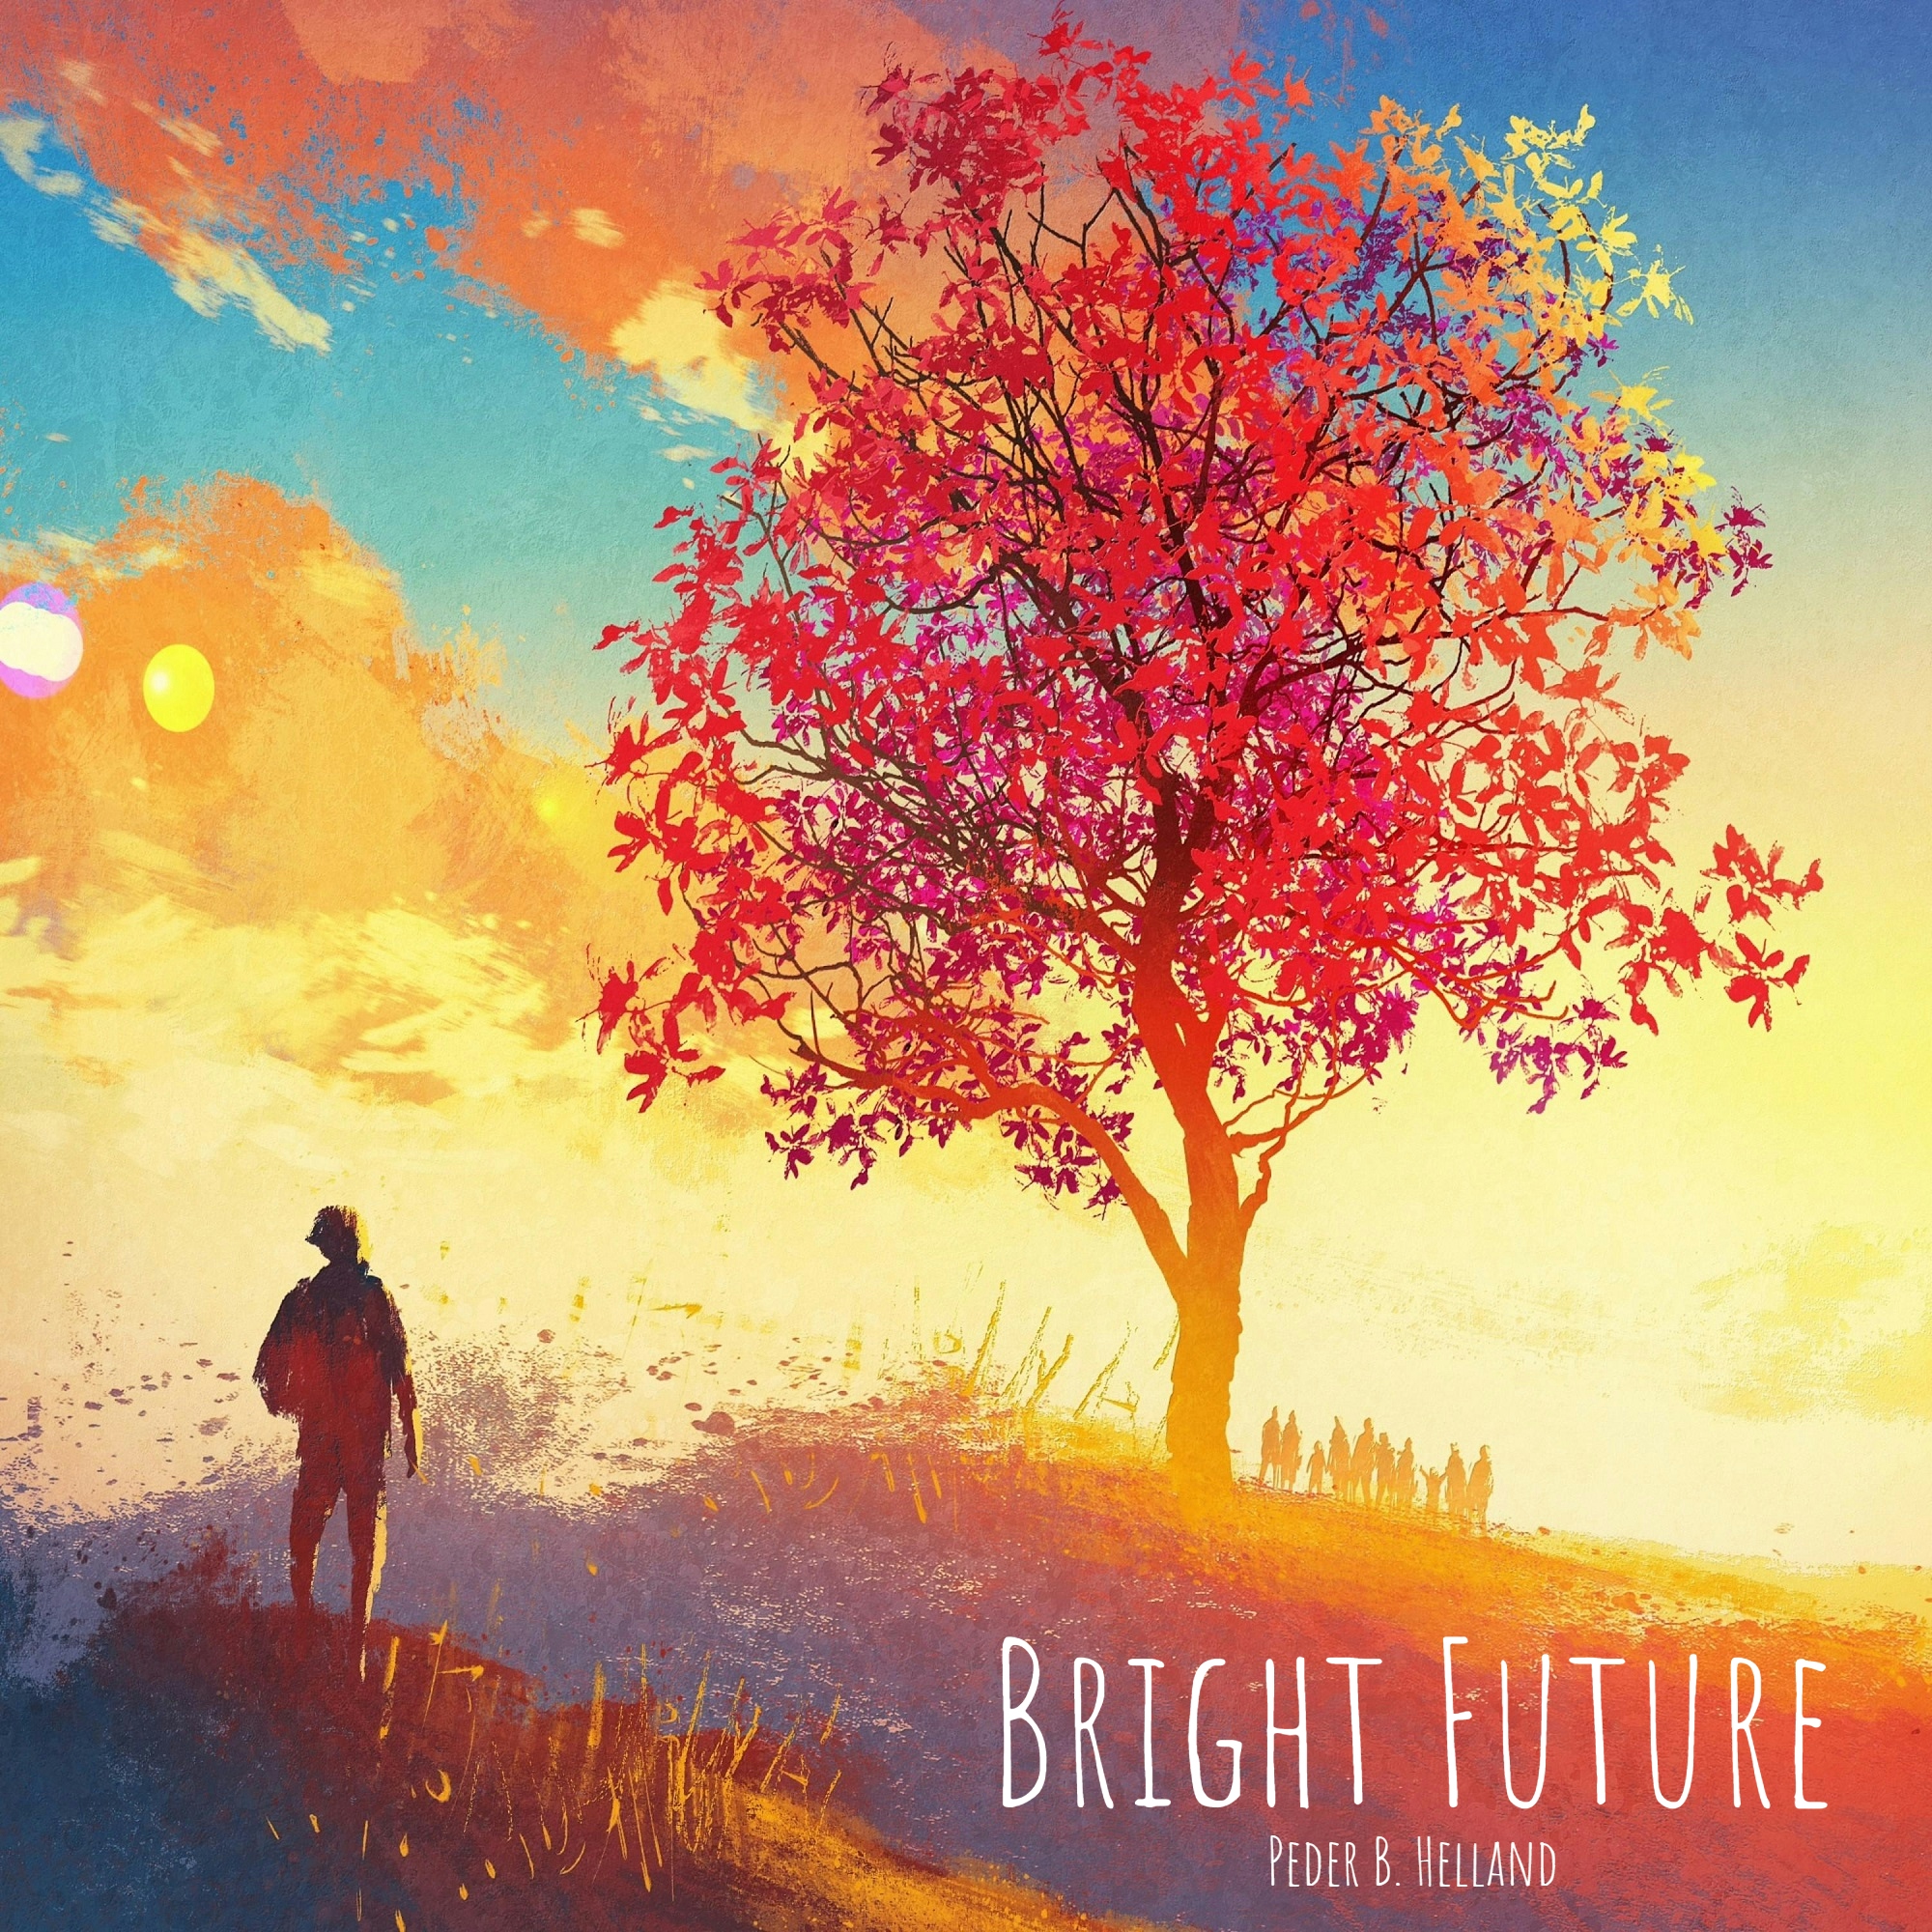 Cover art for the album Bright Future by Peder B. Helland